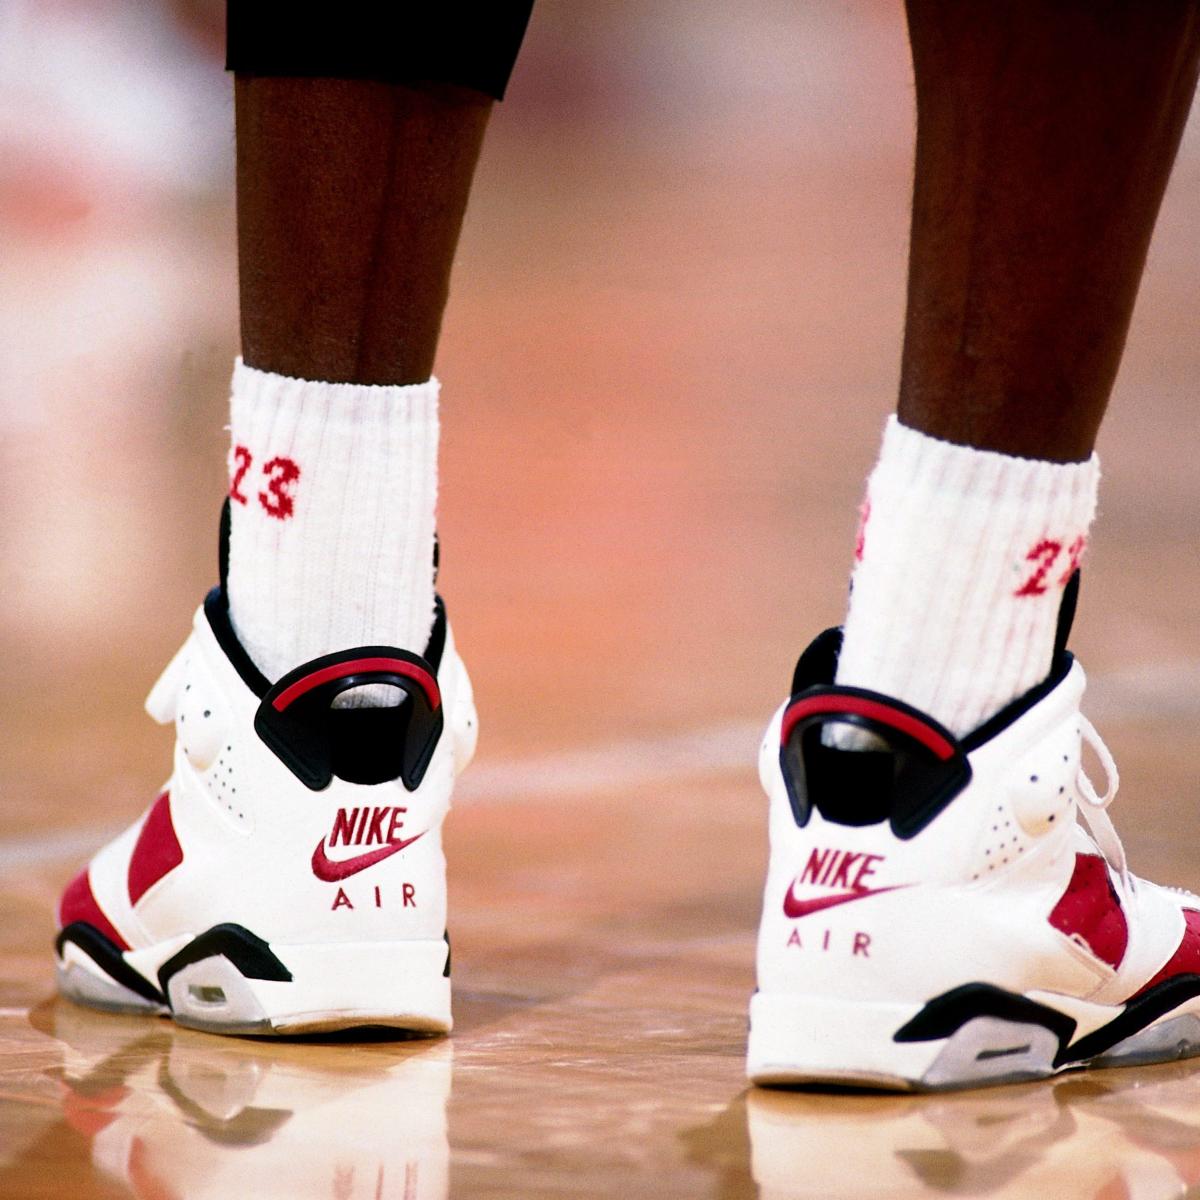 Nike Air Jordan 1 'Pinnacle' Release Date Schedule, Pics and Retail ...